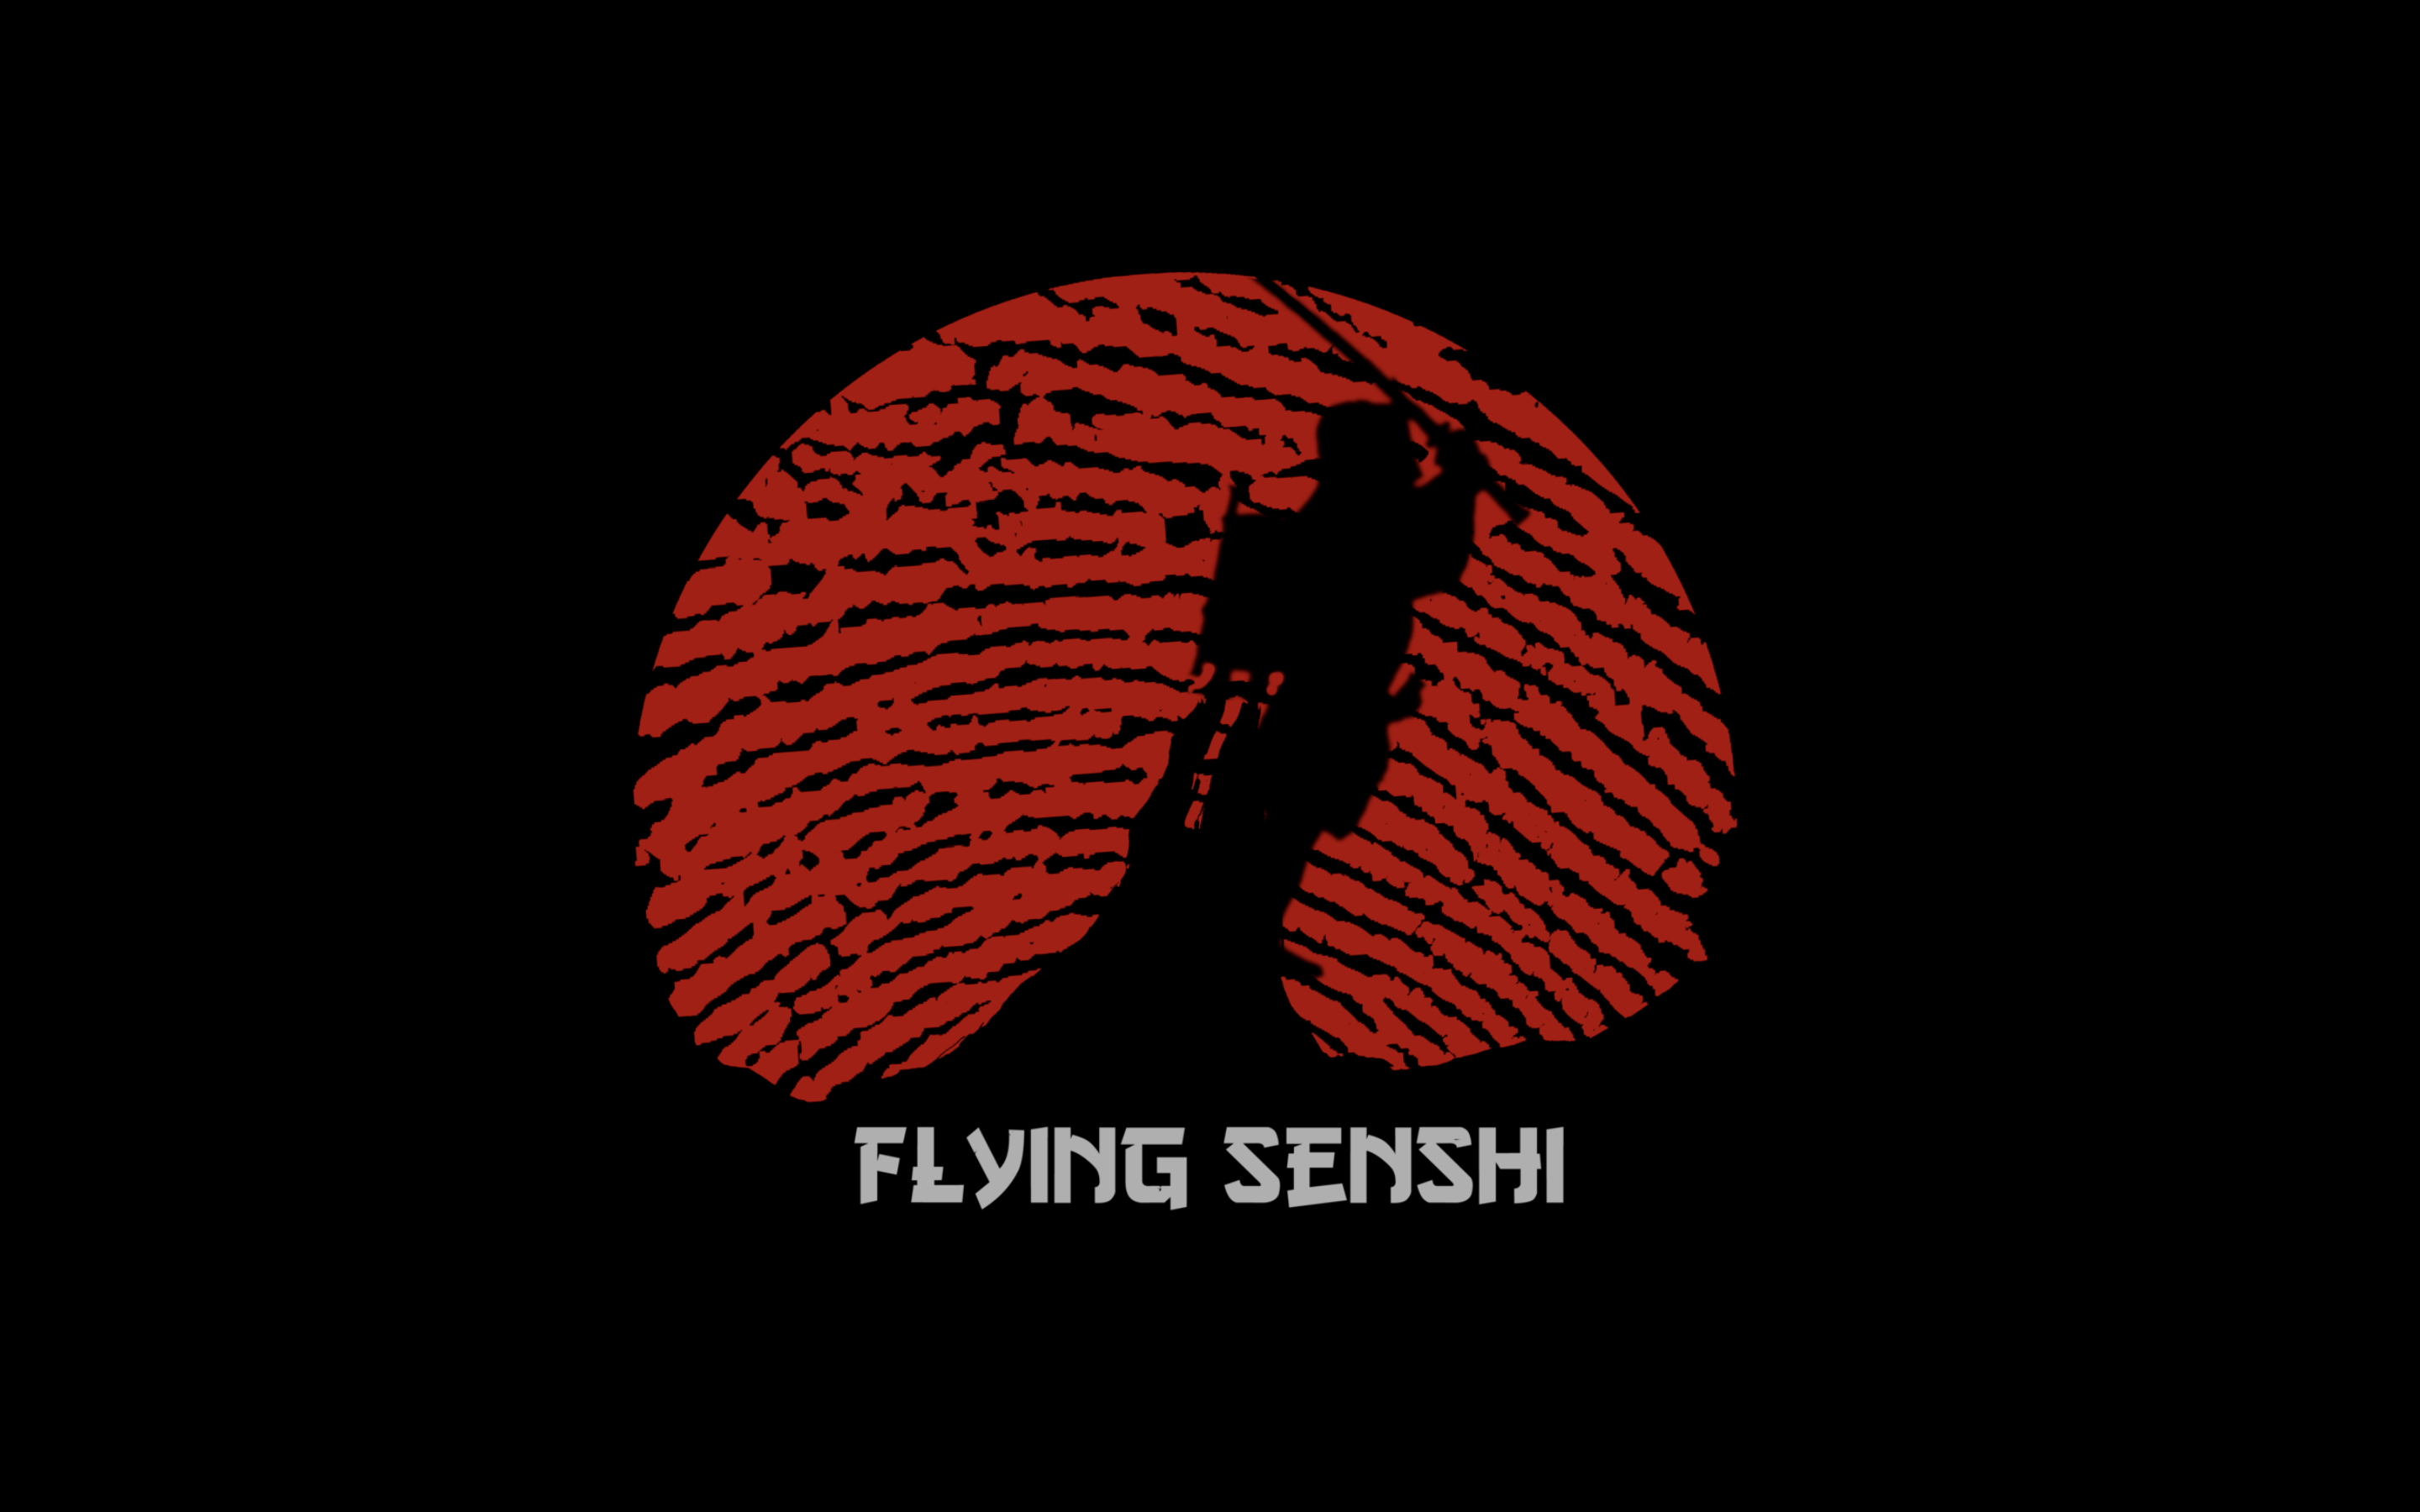 Upcoming Game – „Flying Senshi“ Action Platformer for PC, Mobile & Console